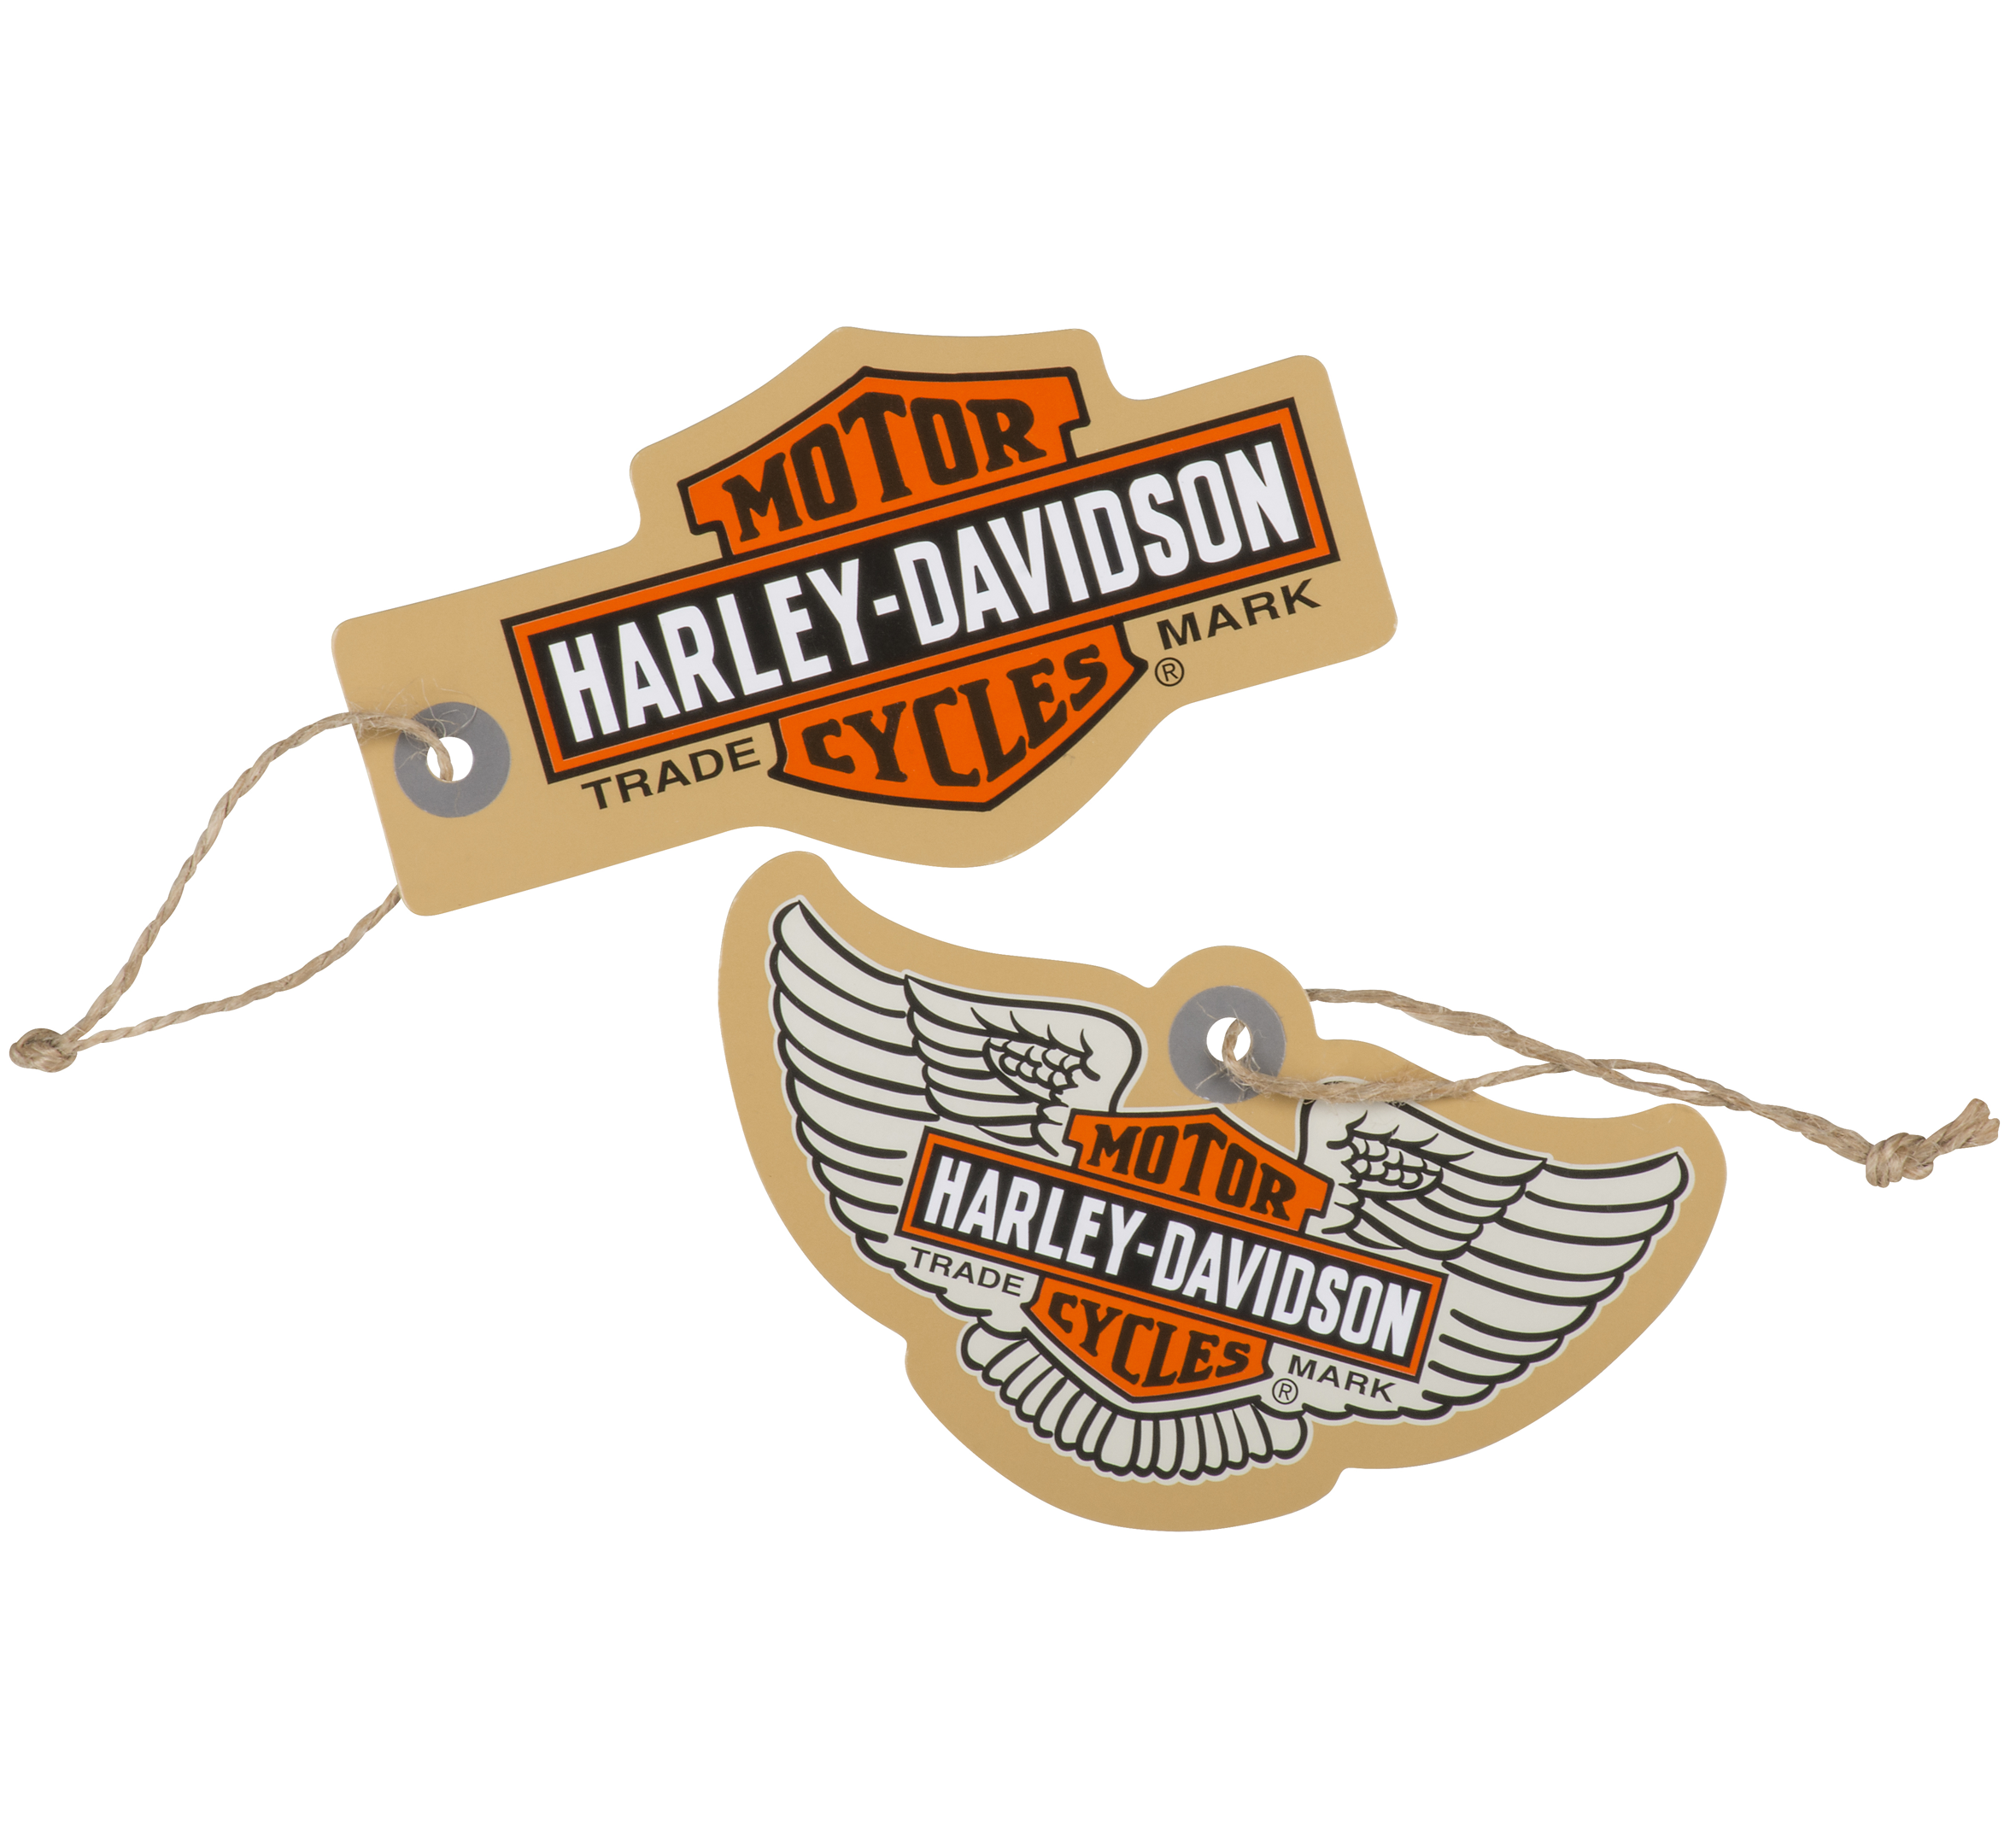 Trademark Winged Bar Shield Gift Tags 98784 21vx Harley Davidson Usa